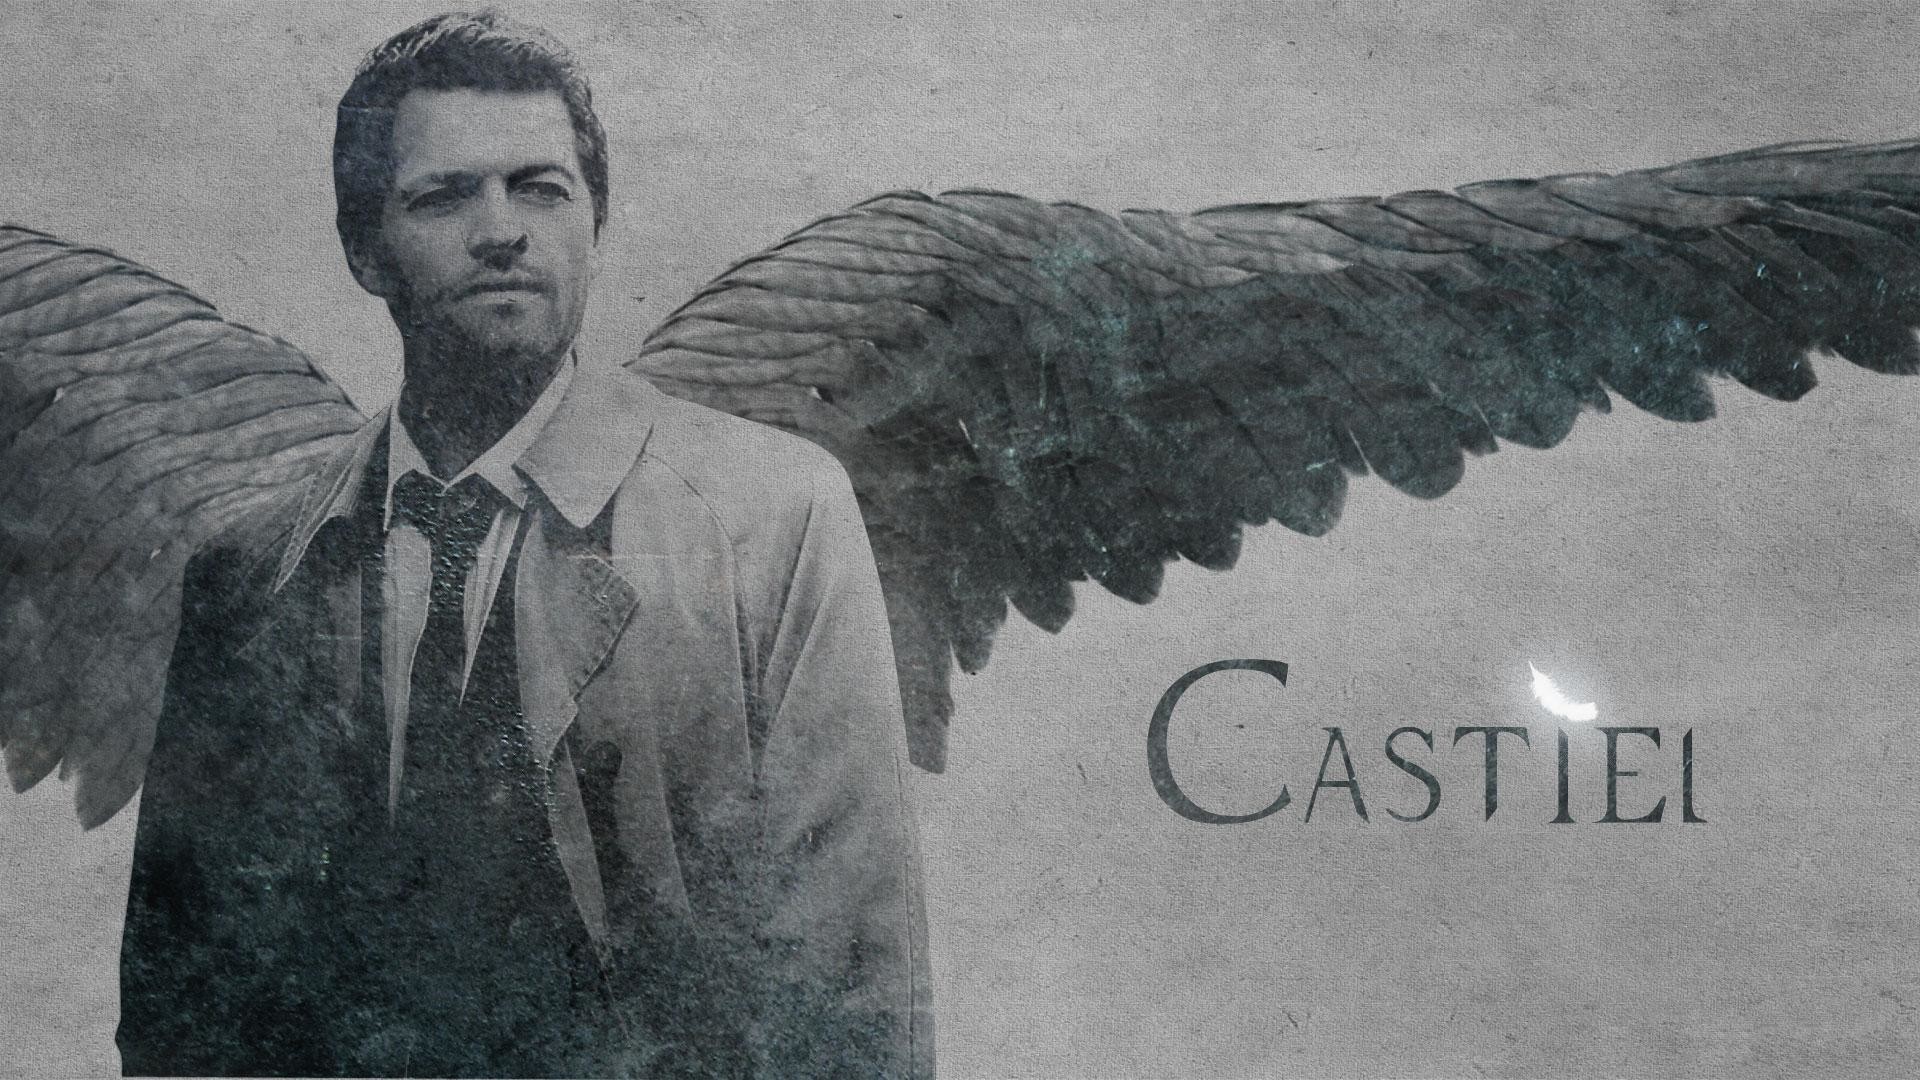 Castiel-Supernatural-Iphone-Image-Download-Free